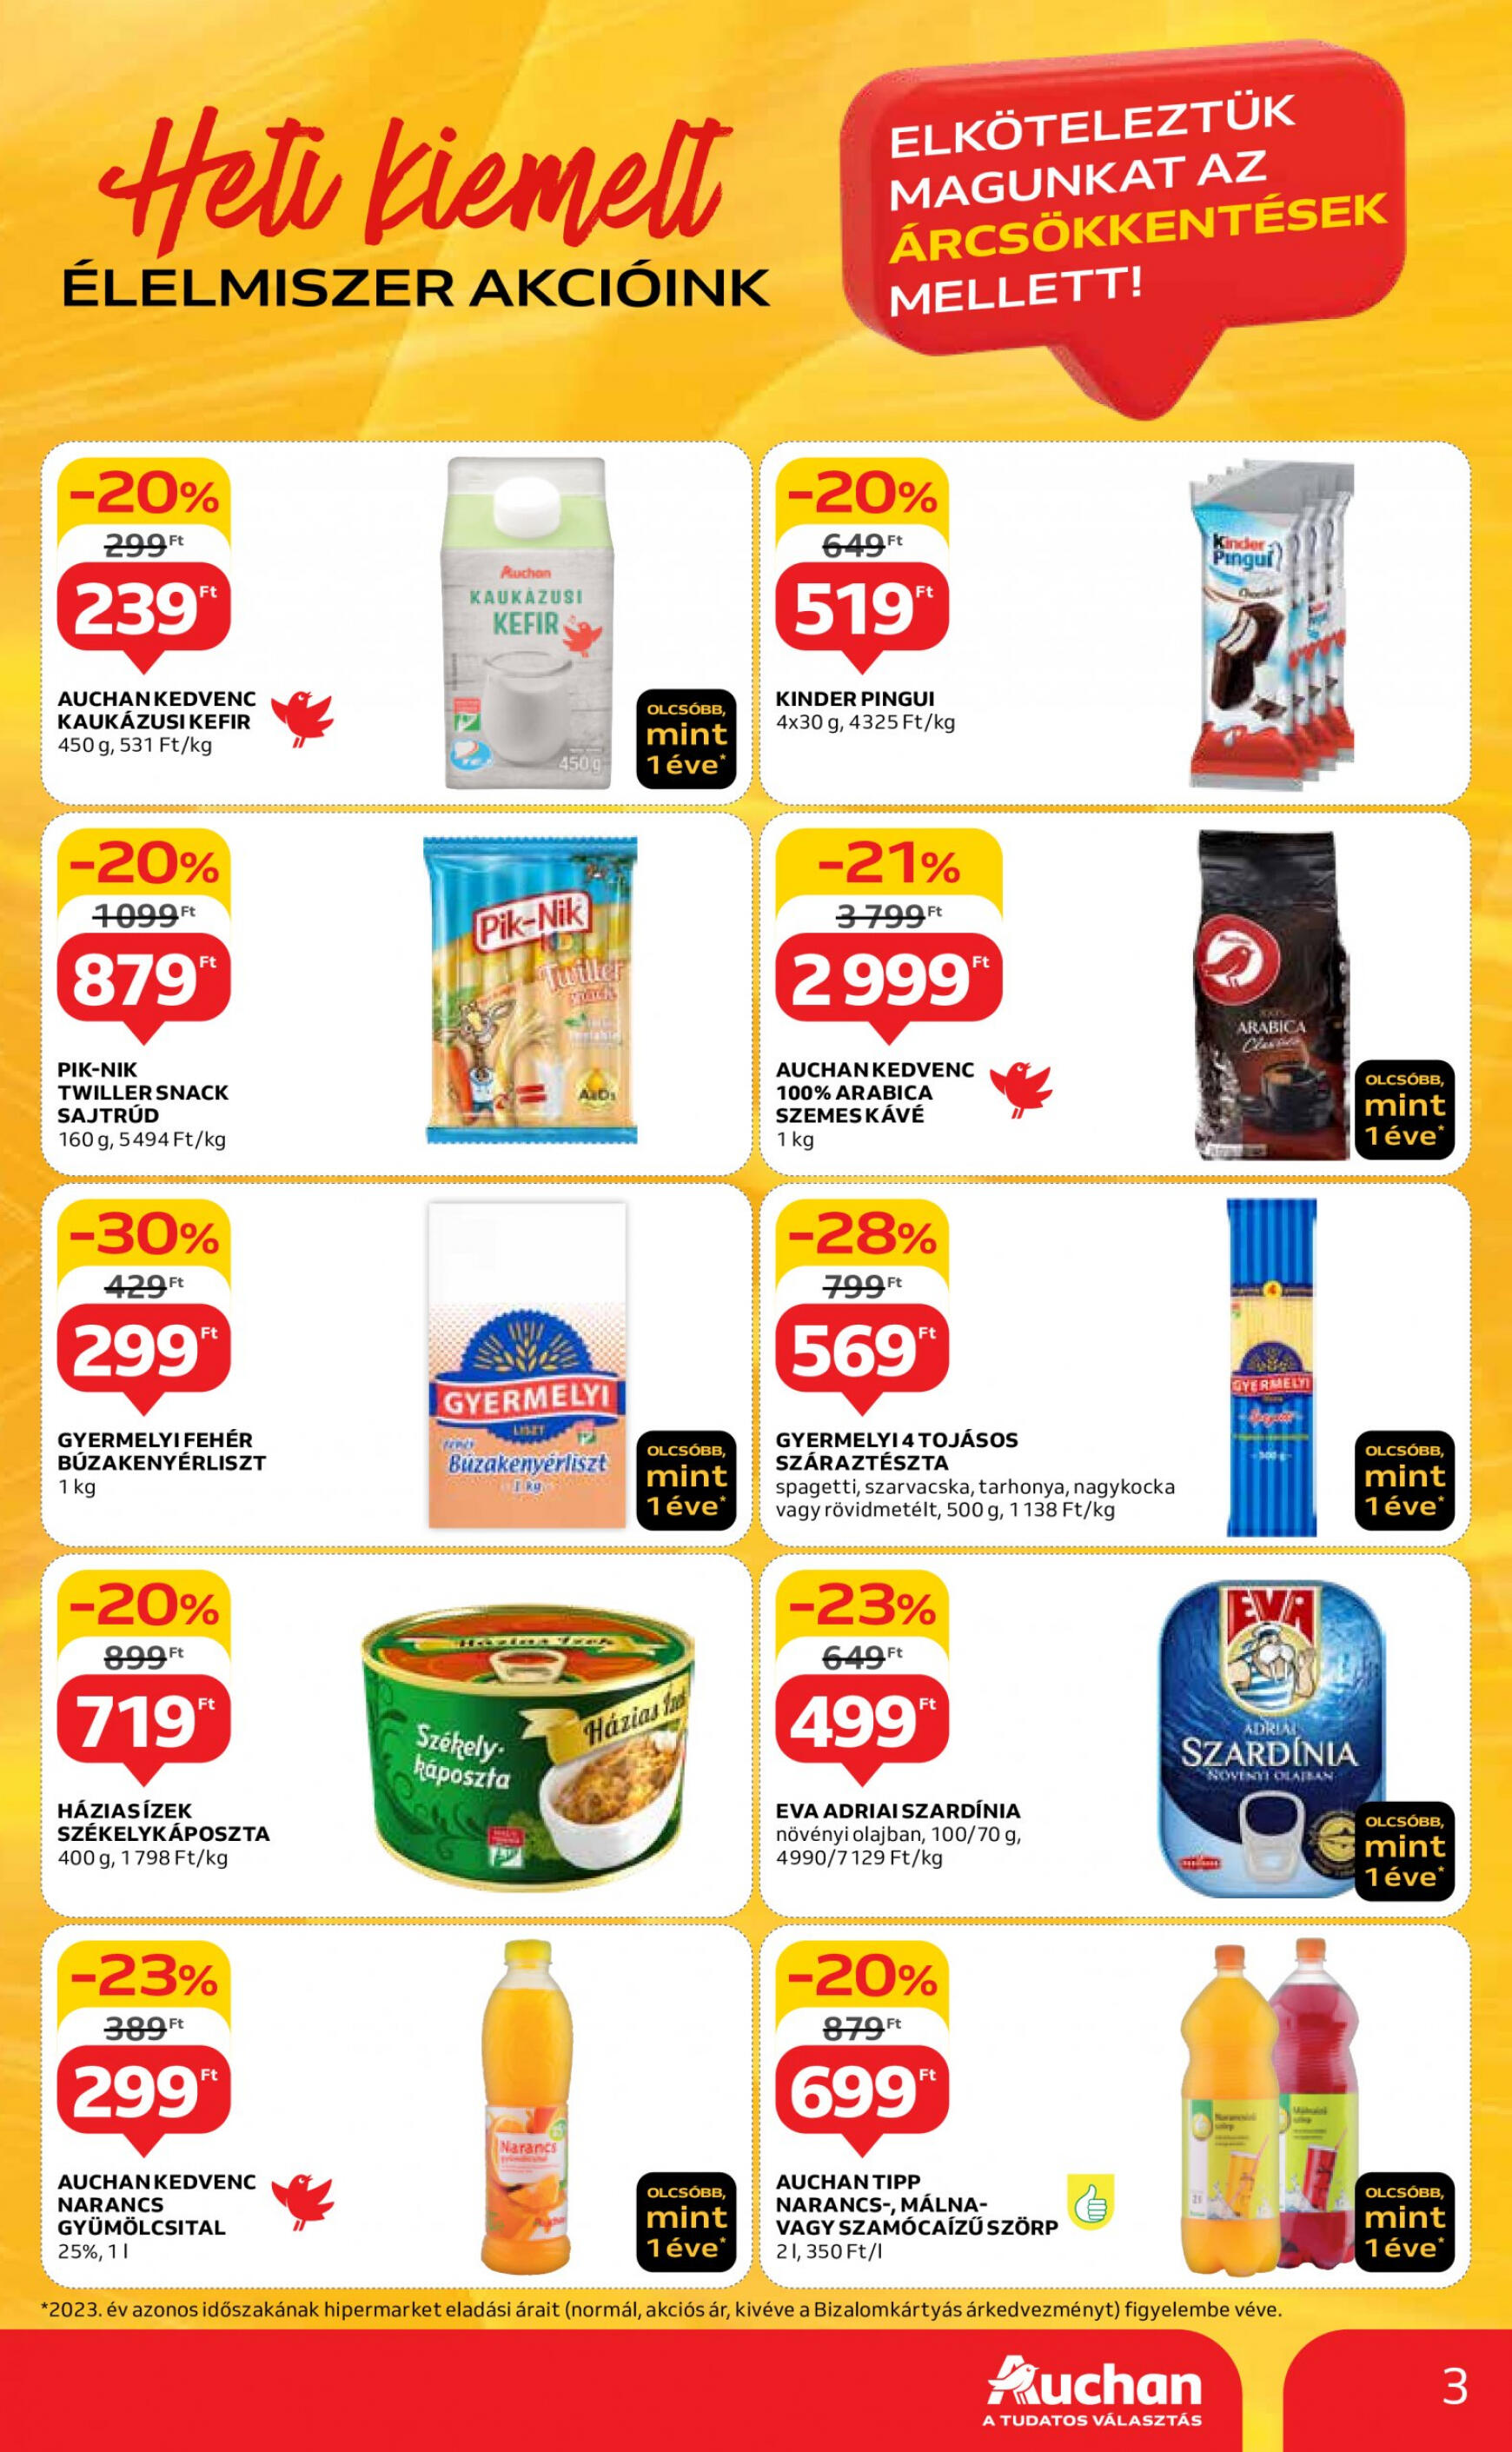 auchan - Aktuális újság Auchan 04.18. - 04.24. - page: 3